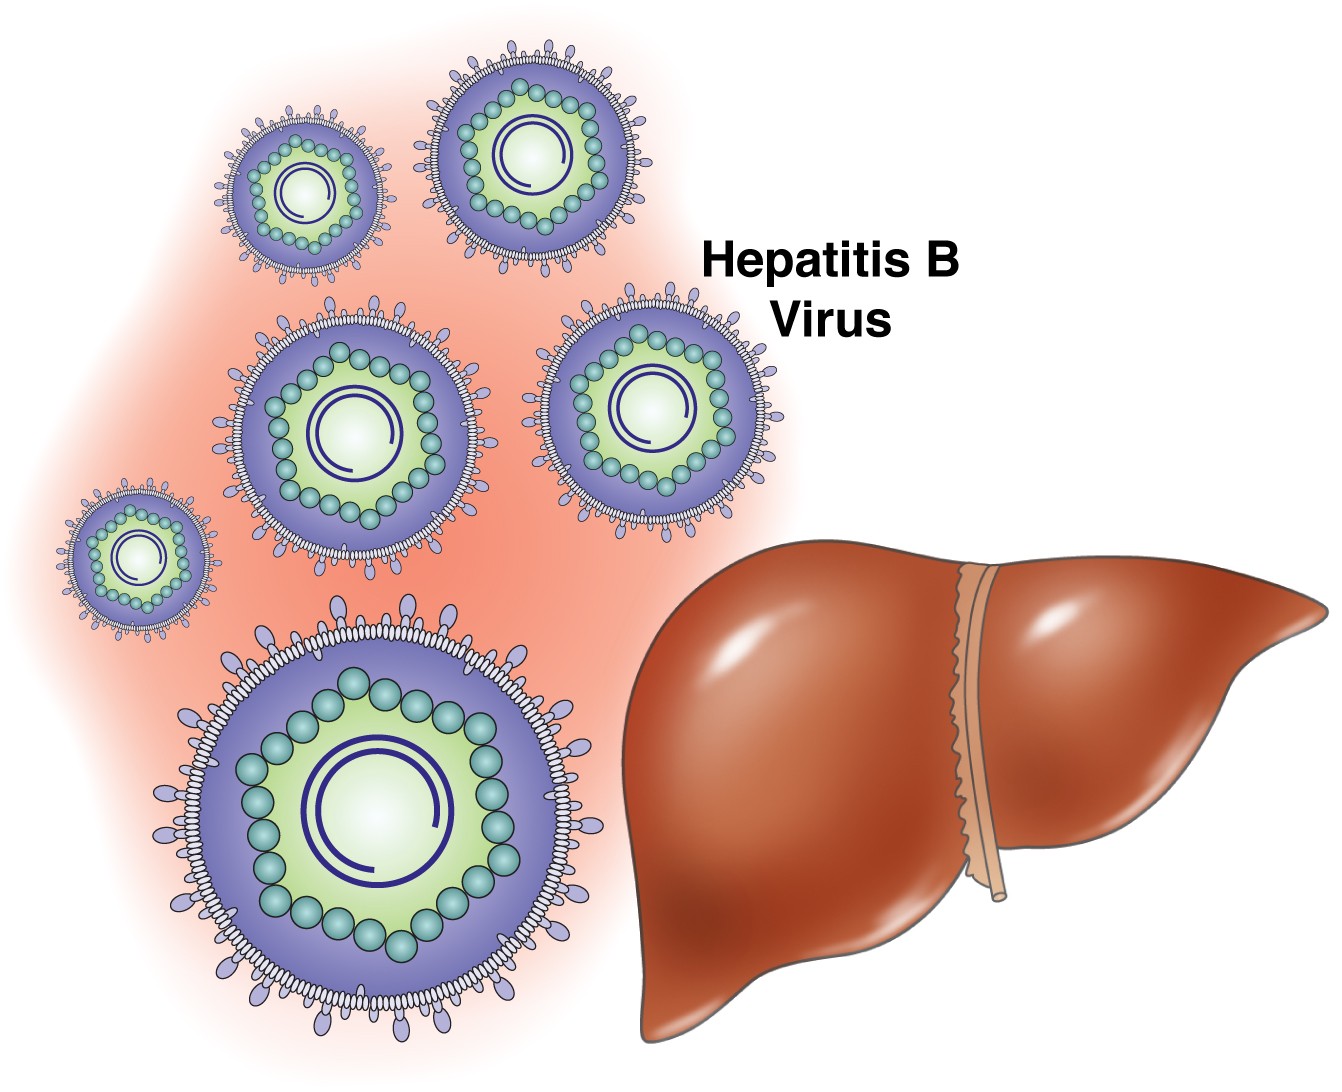 powerpoint presentation on hepatitis b